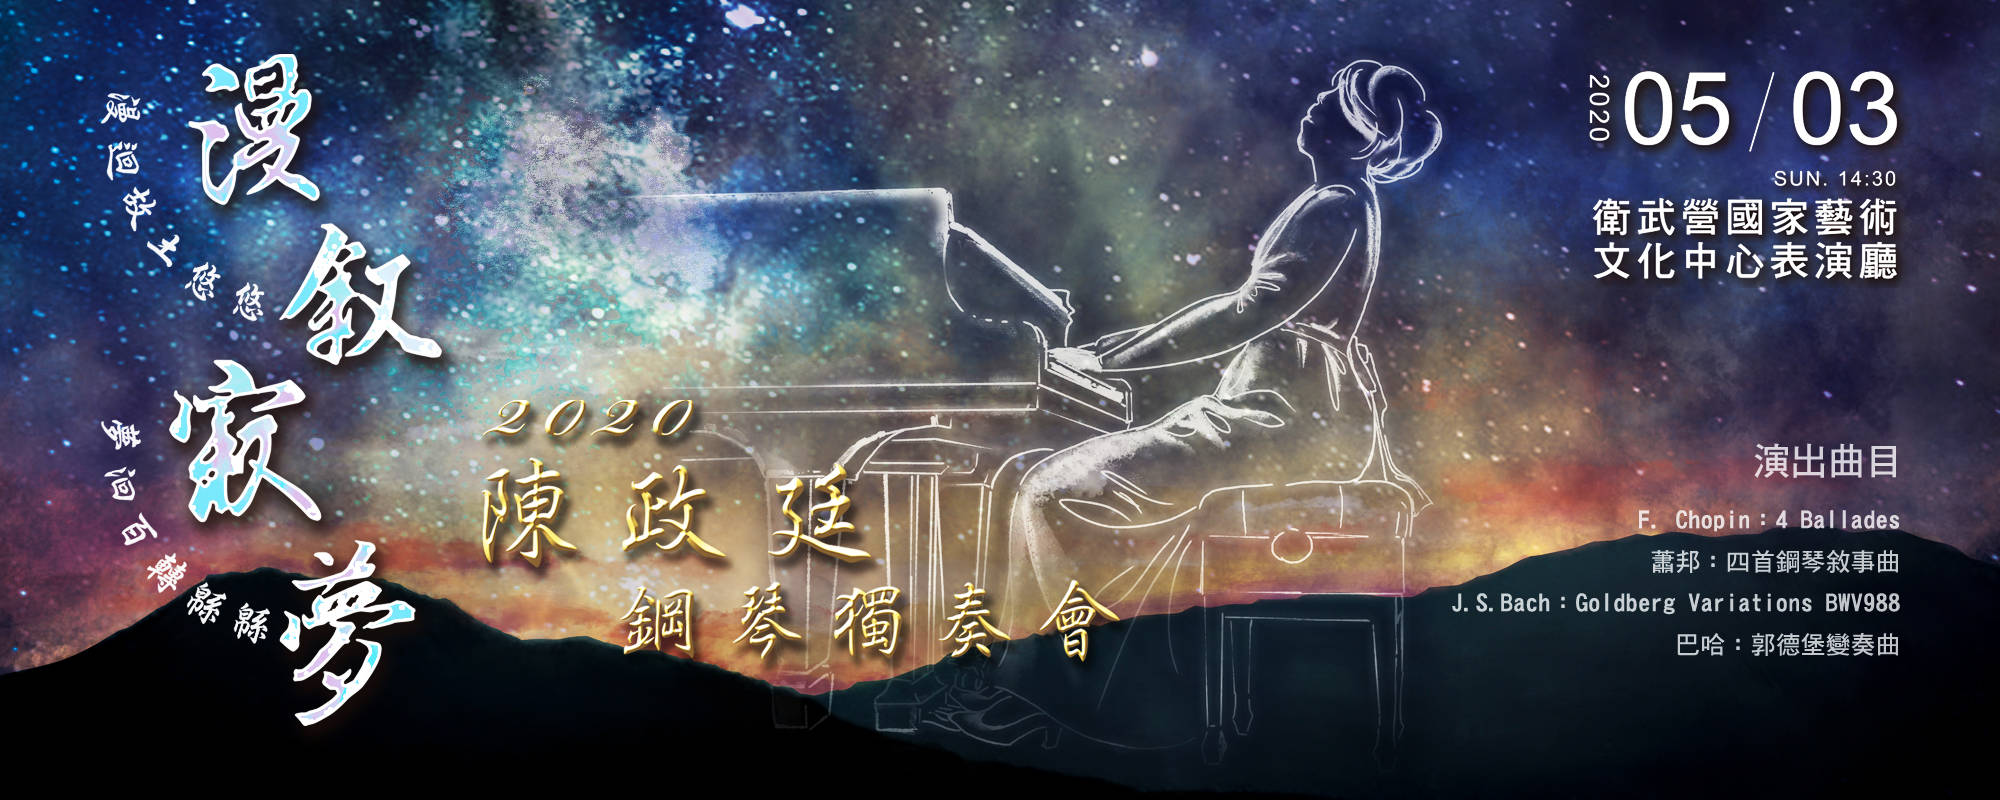 2020 Cheng-Ting Chen Piano Recital